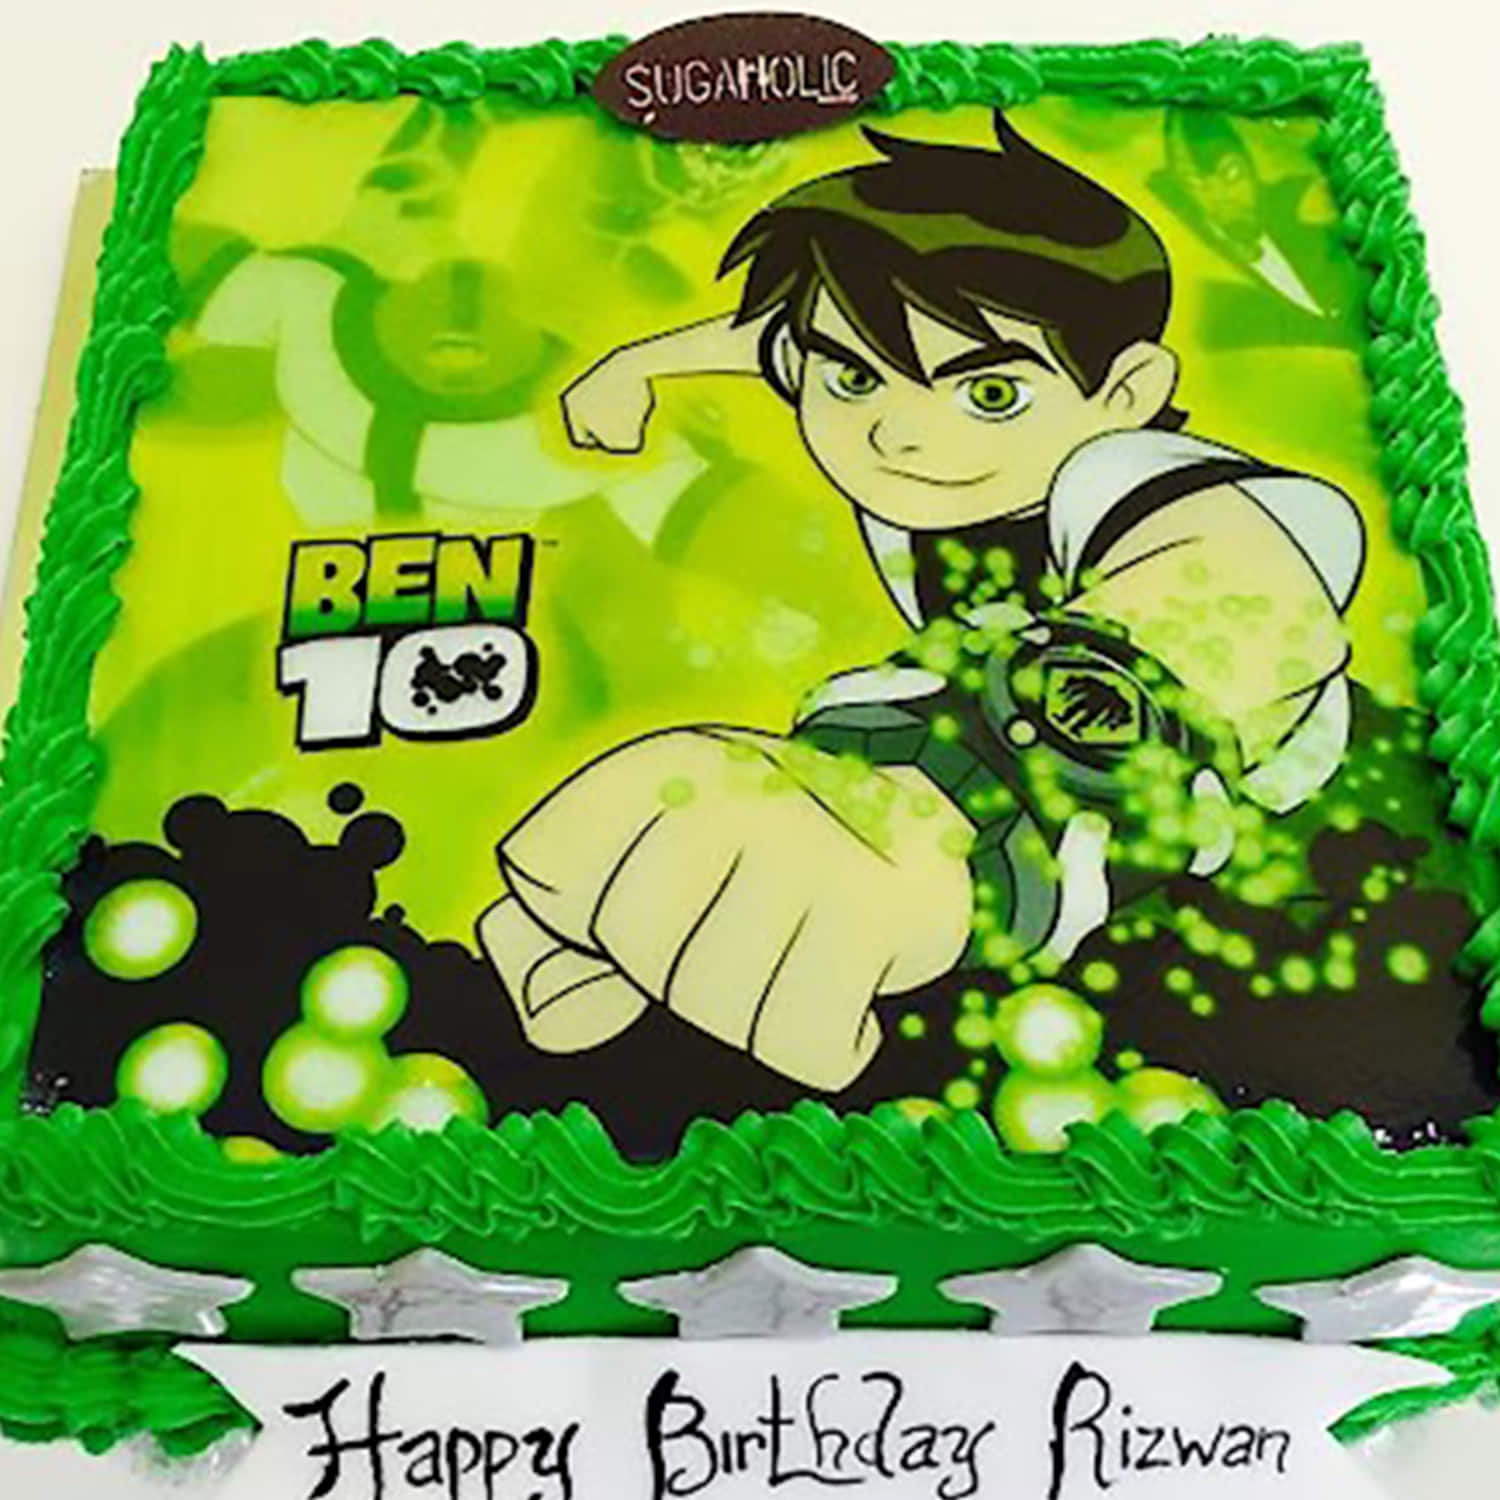 The Sensational Cakes: Ben 10 Cake 3D Singapore : Xavier Birthday Cake